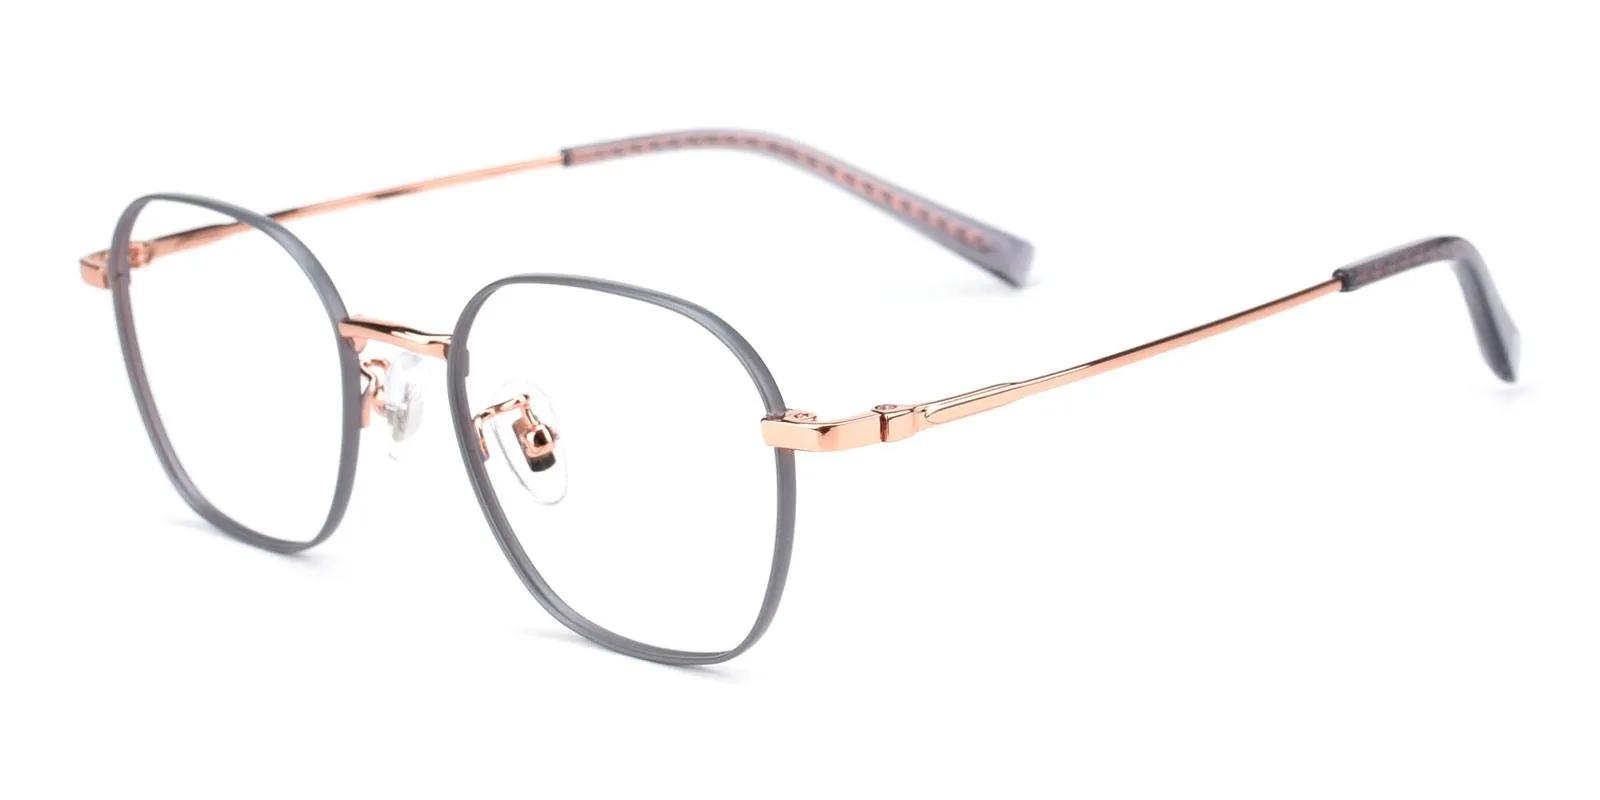 Udeify Gray TR Eyeglasses , NosePads Frames from ABBE Glasses